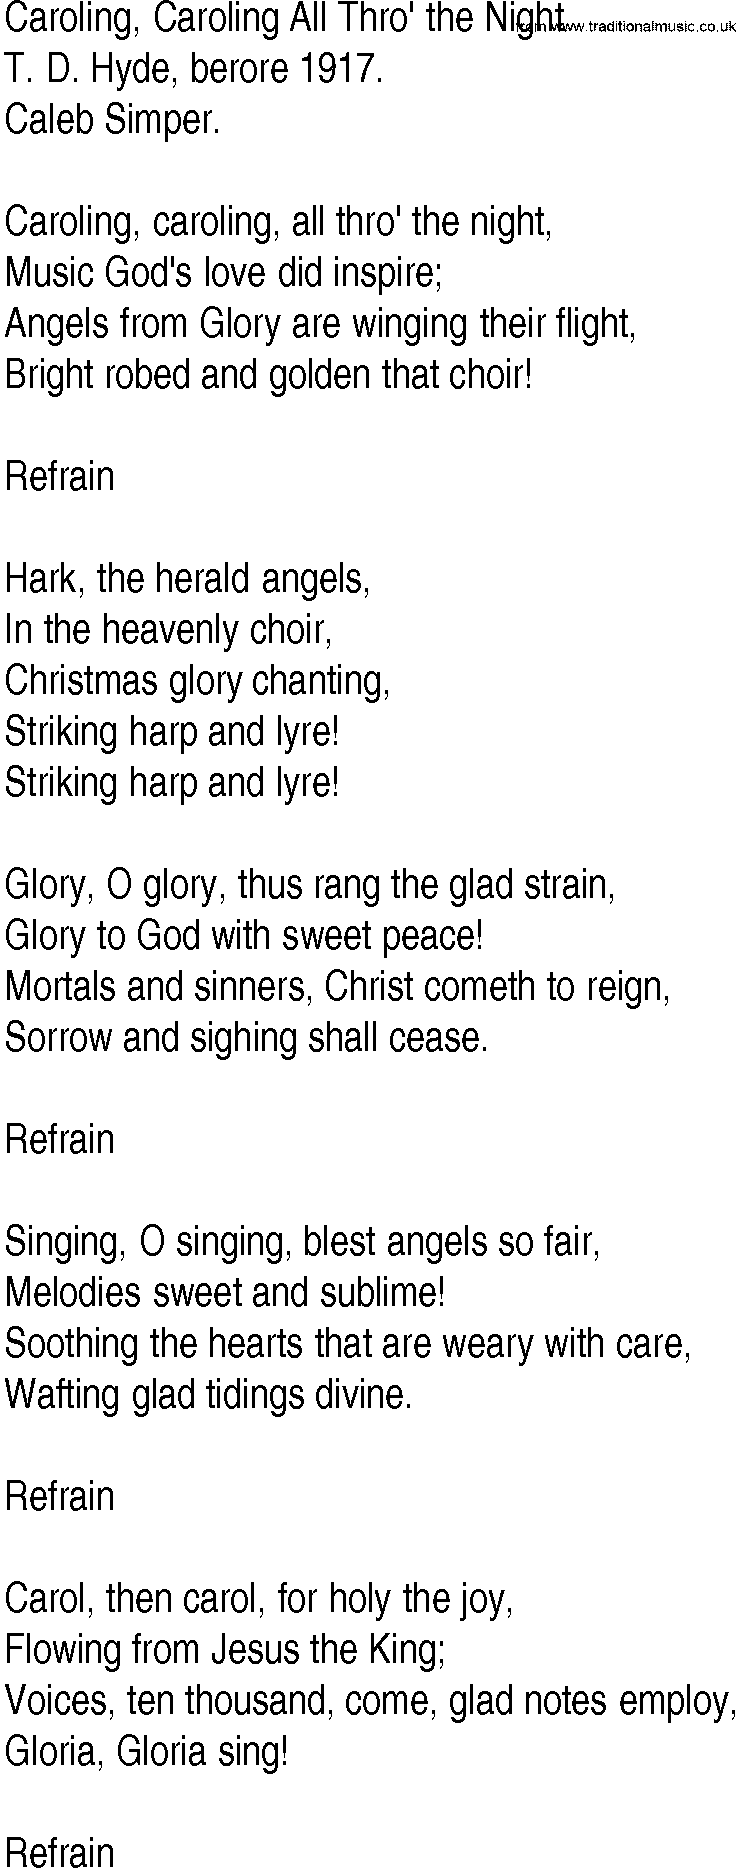 Hymn and Gospel Song: Caroling, Caroling All Thro' the Night by T D Hyde berore lyrics